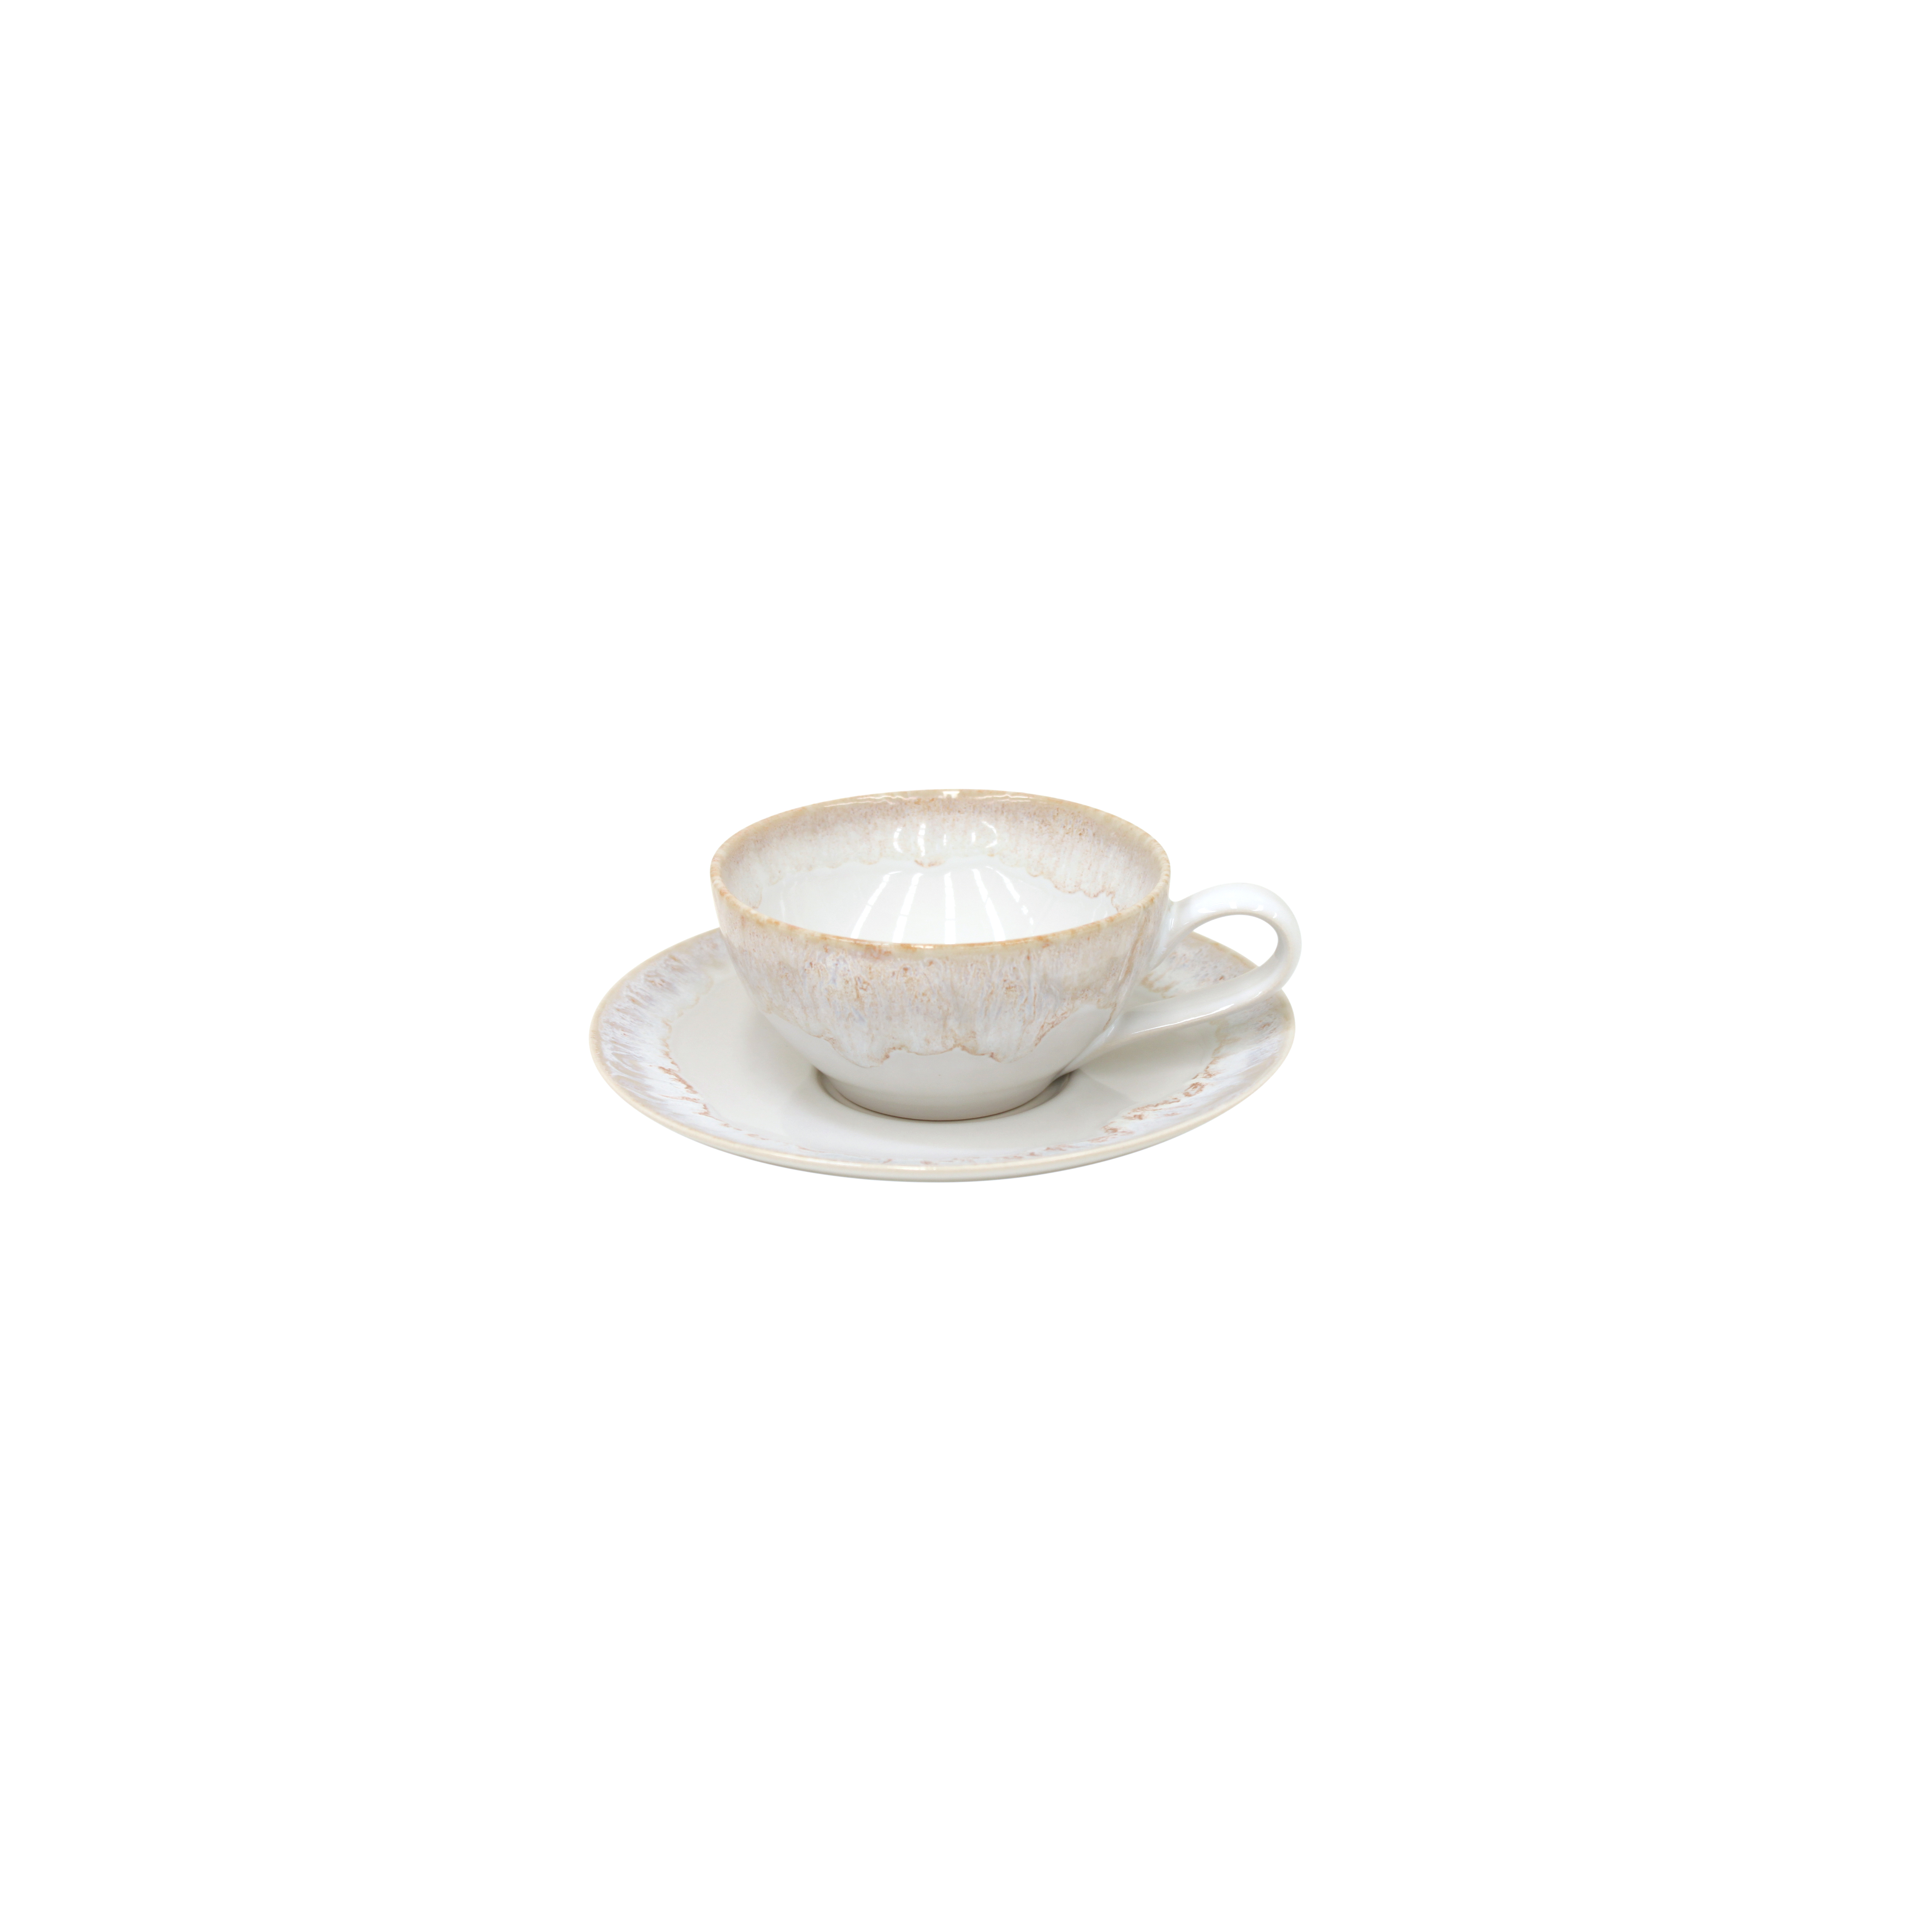 Taormina White Tea Cup And Saucer 0.2l Gift